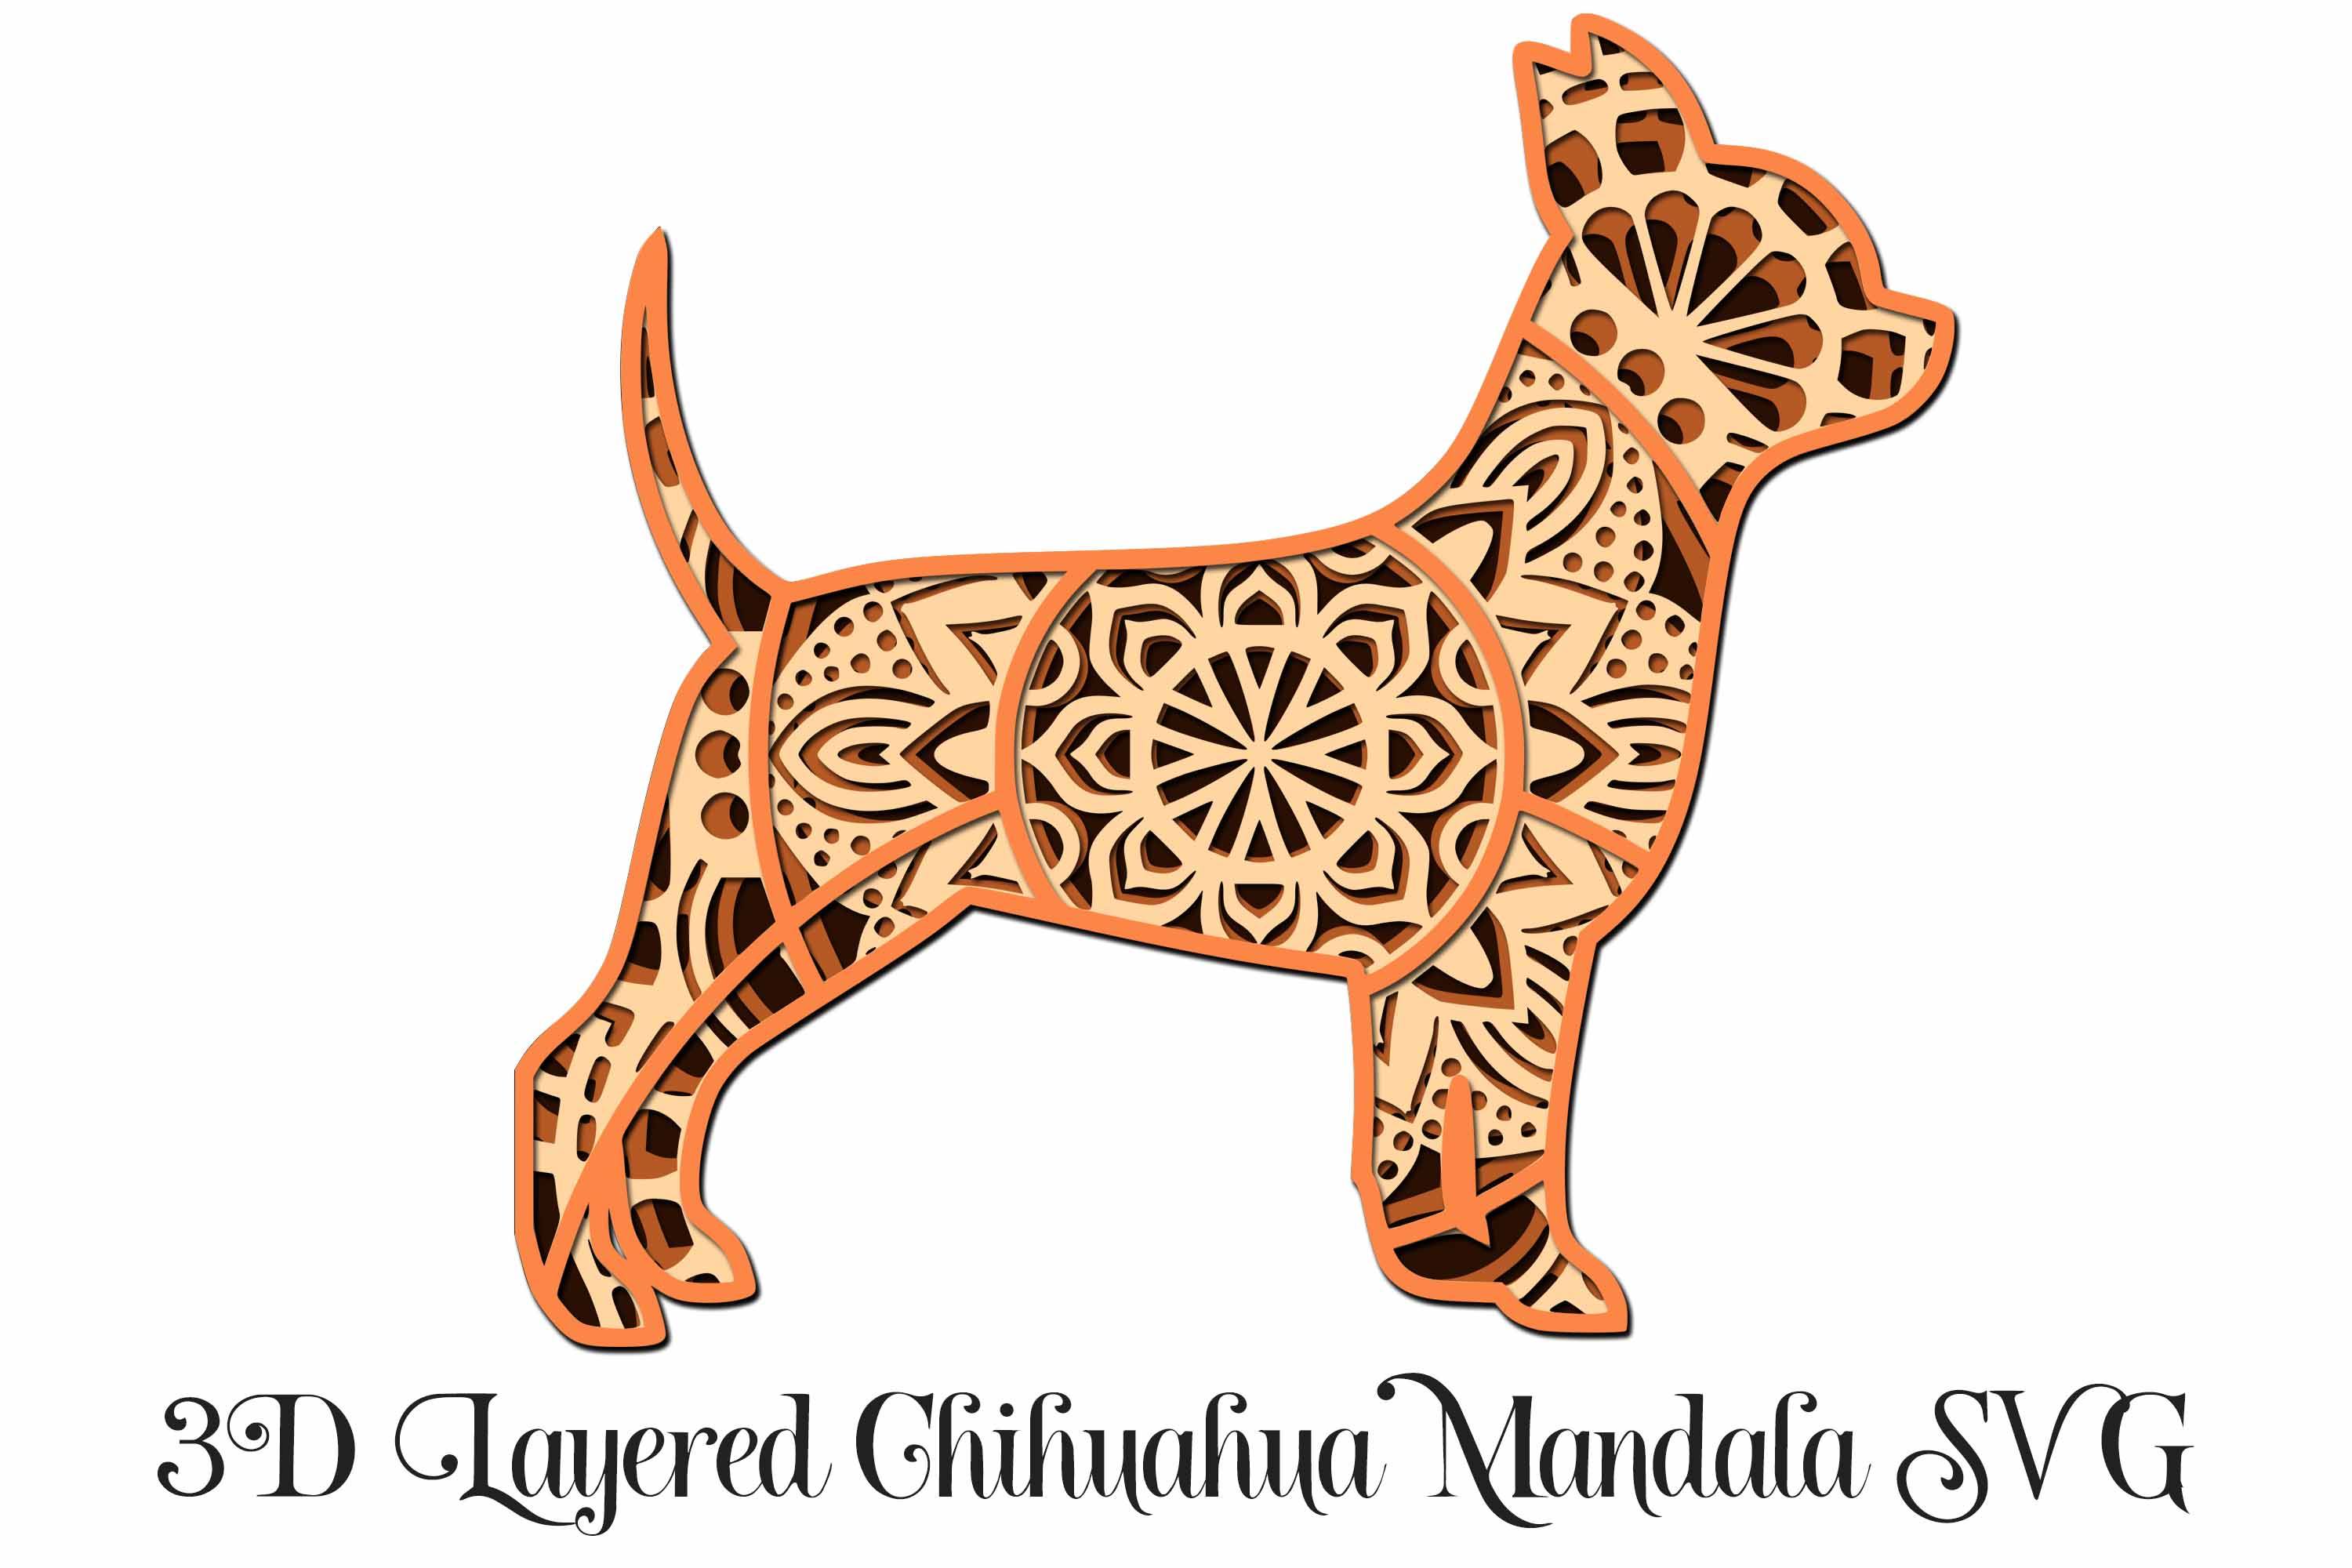 Download 3d Layered Dachshund Mandala Svg File 4 Layers Dog Svg Layered Cut File Clip Art Art Collectibles